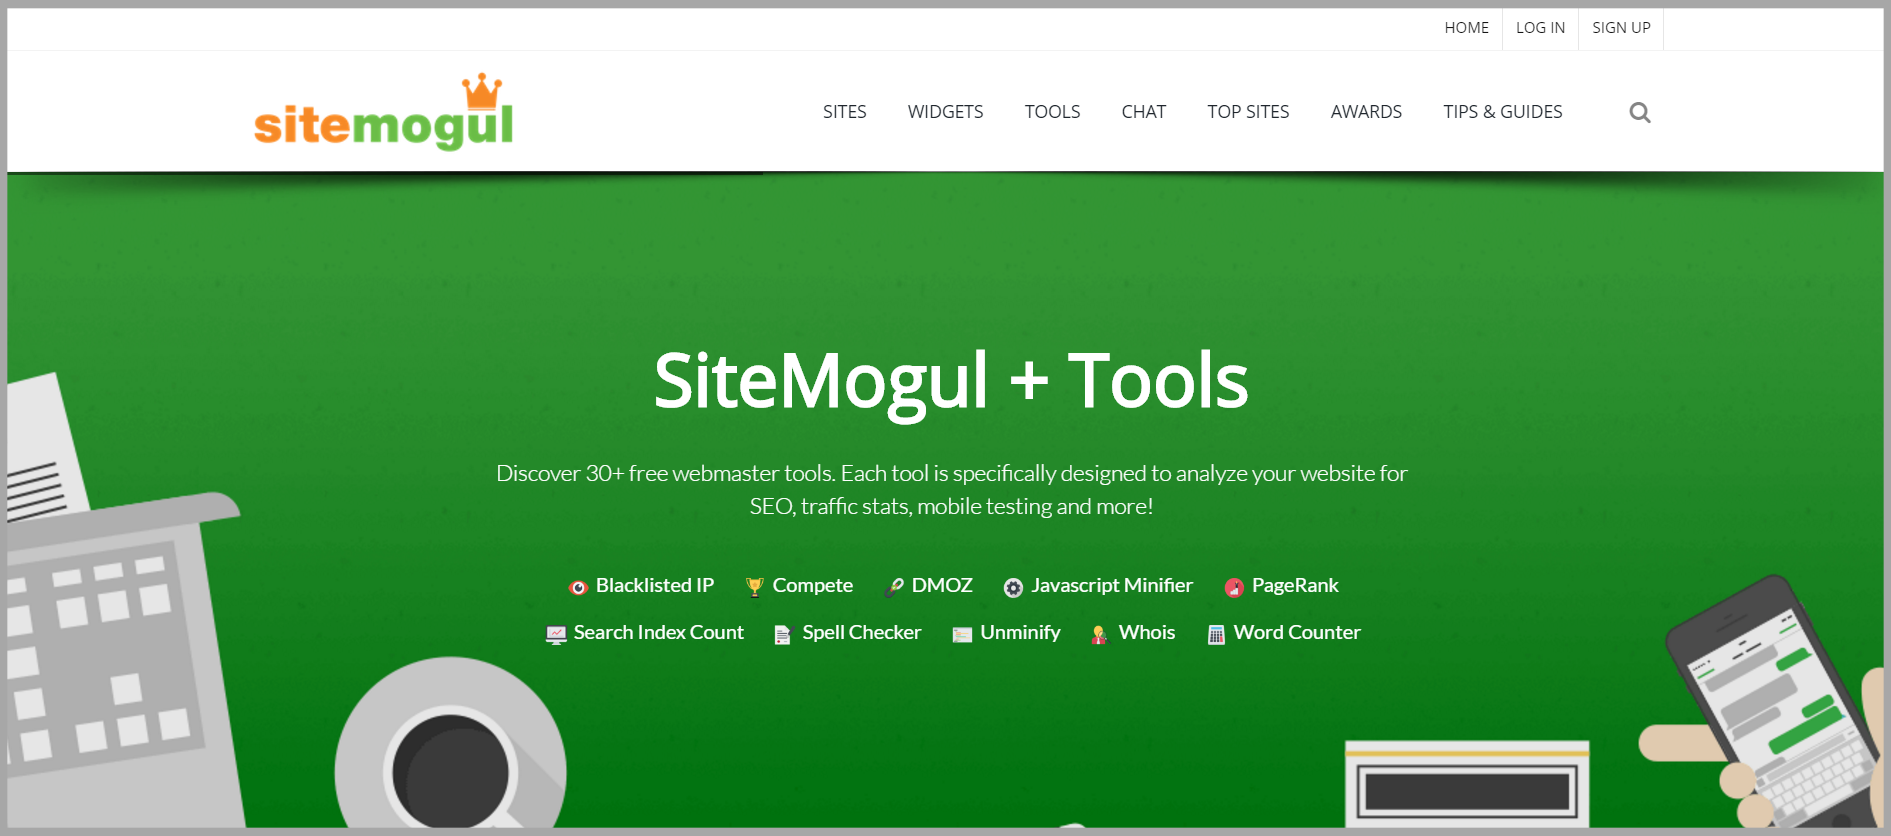 SiteMogul